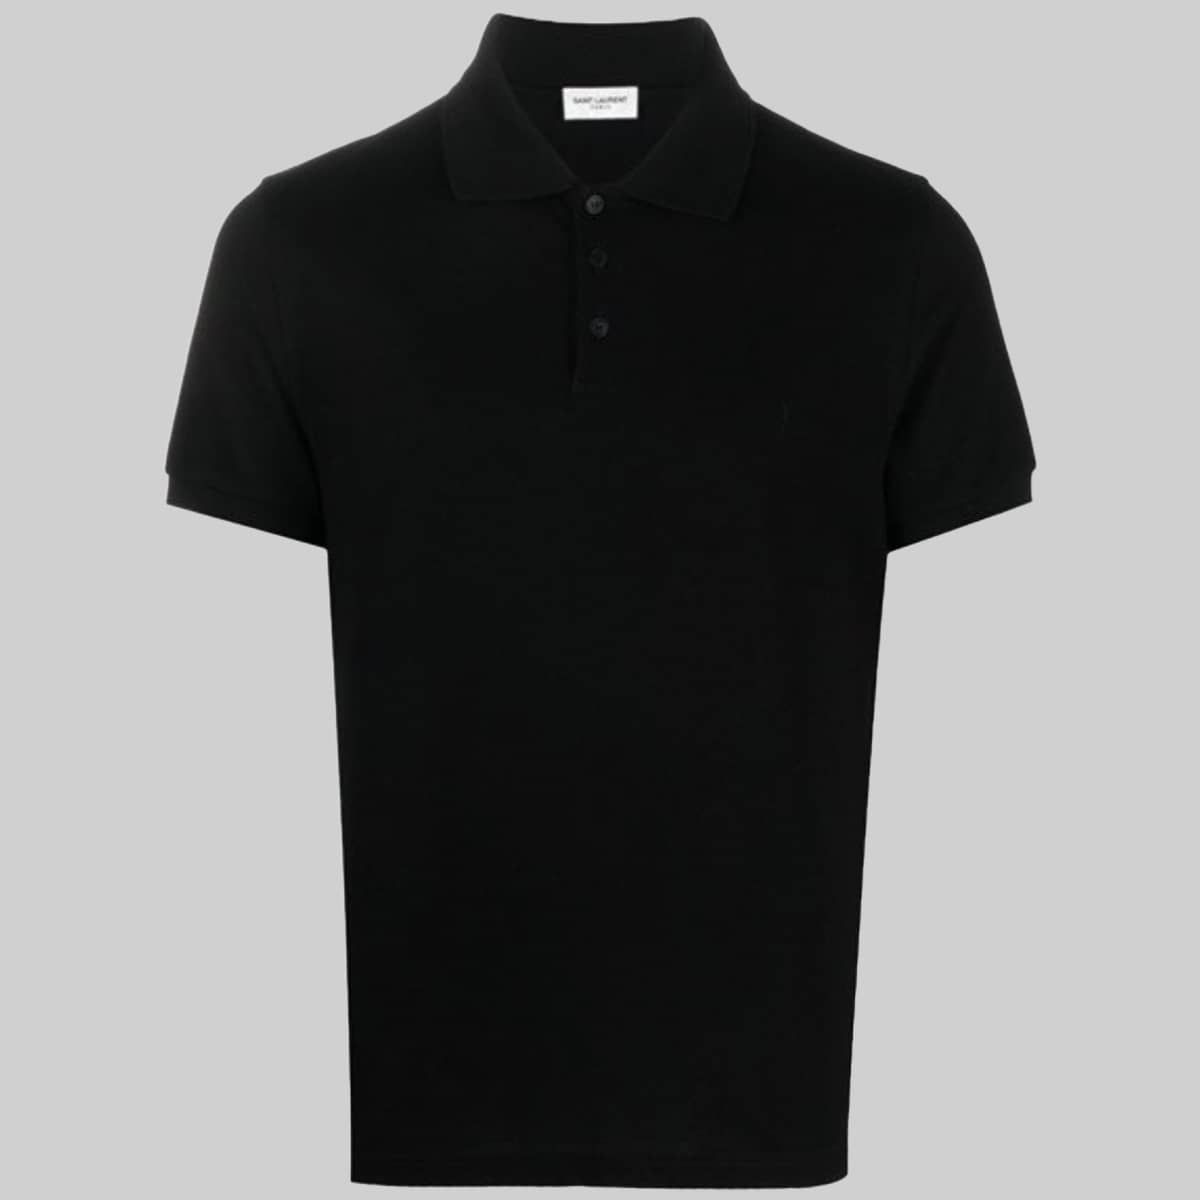 Classic Black Polo T-Shirt